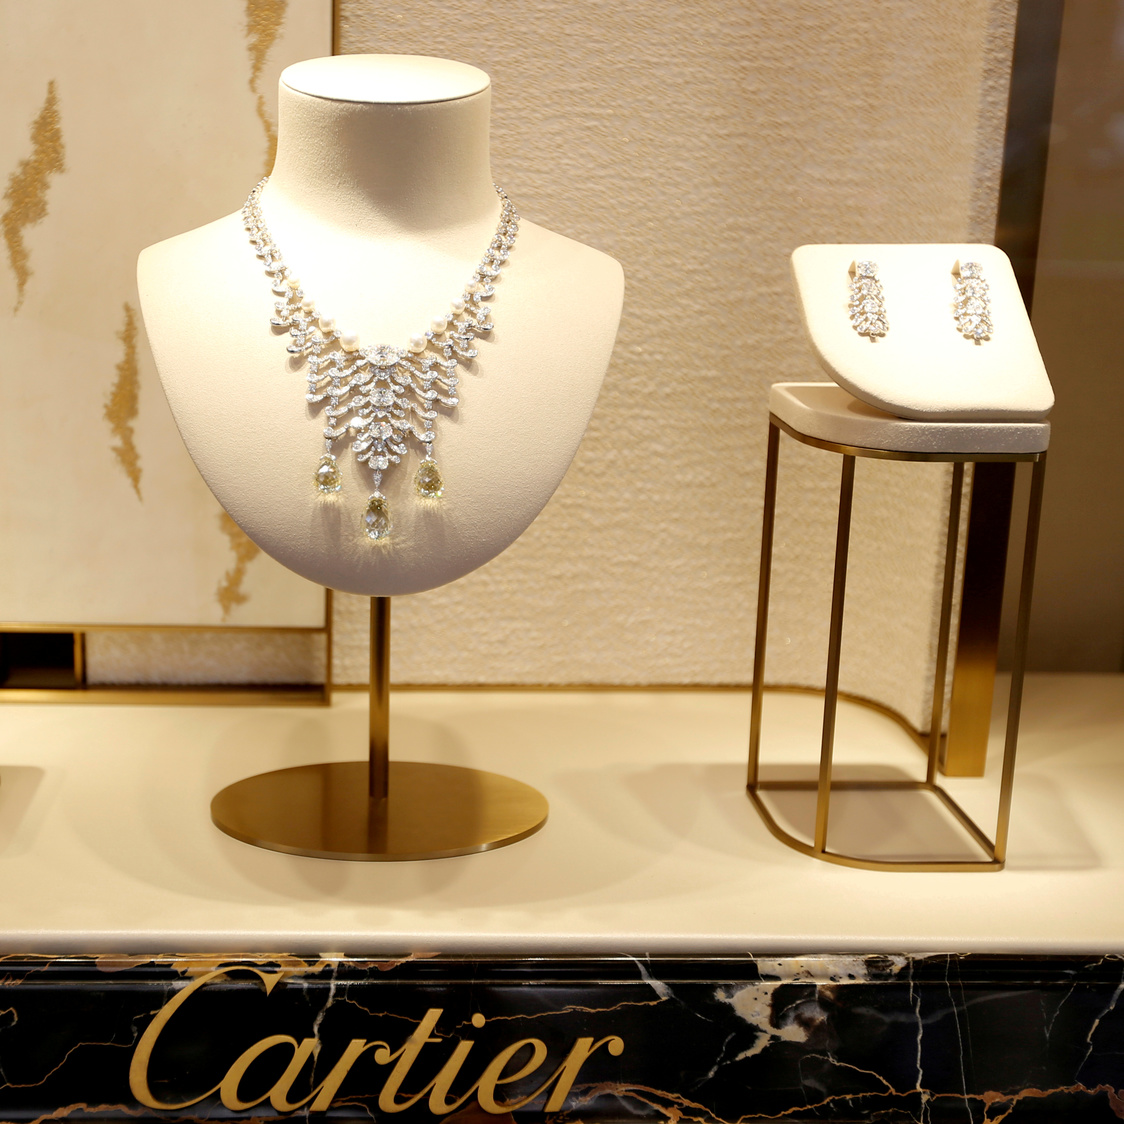 cartier jewelry mission statement